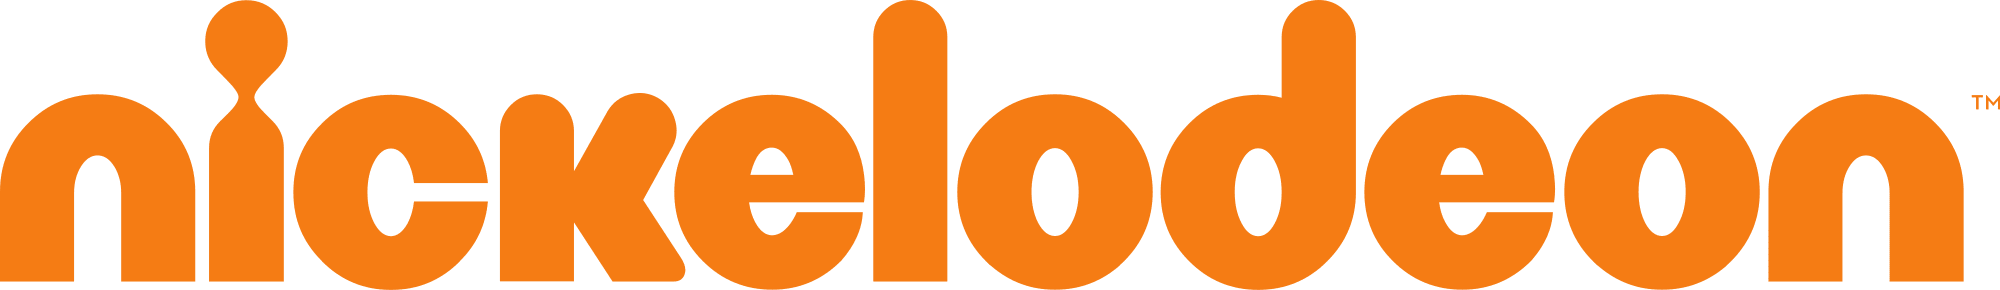 Nickelodeon Logo - Cynopsis Media